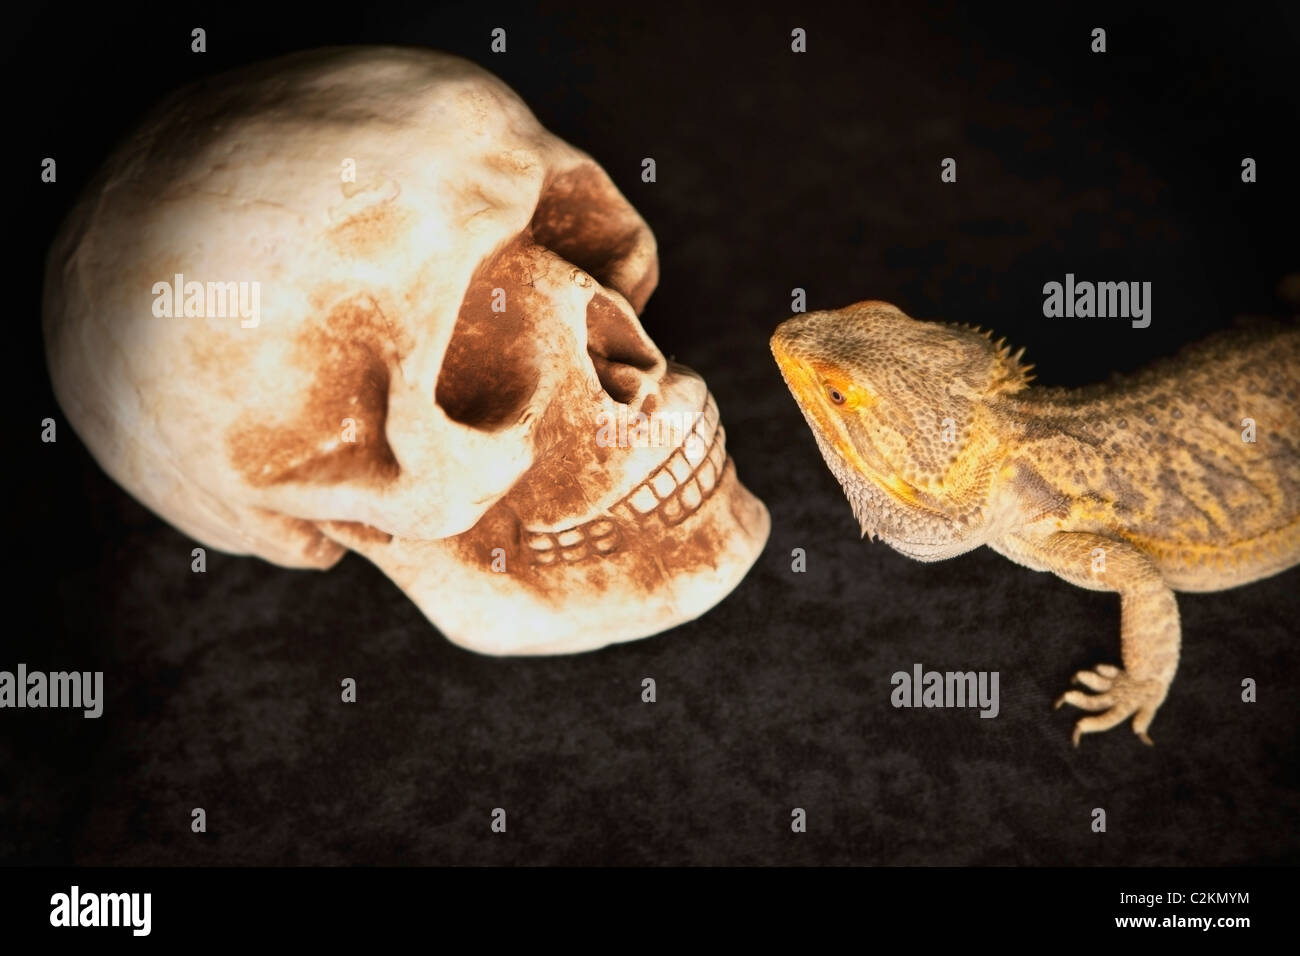 A Lizard Looking At A Human Skull Stock Photo